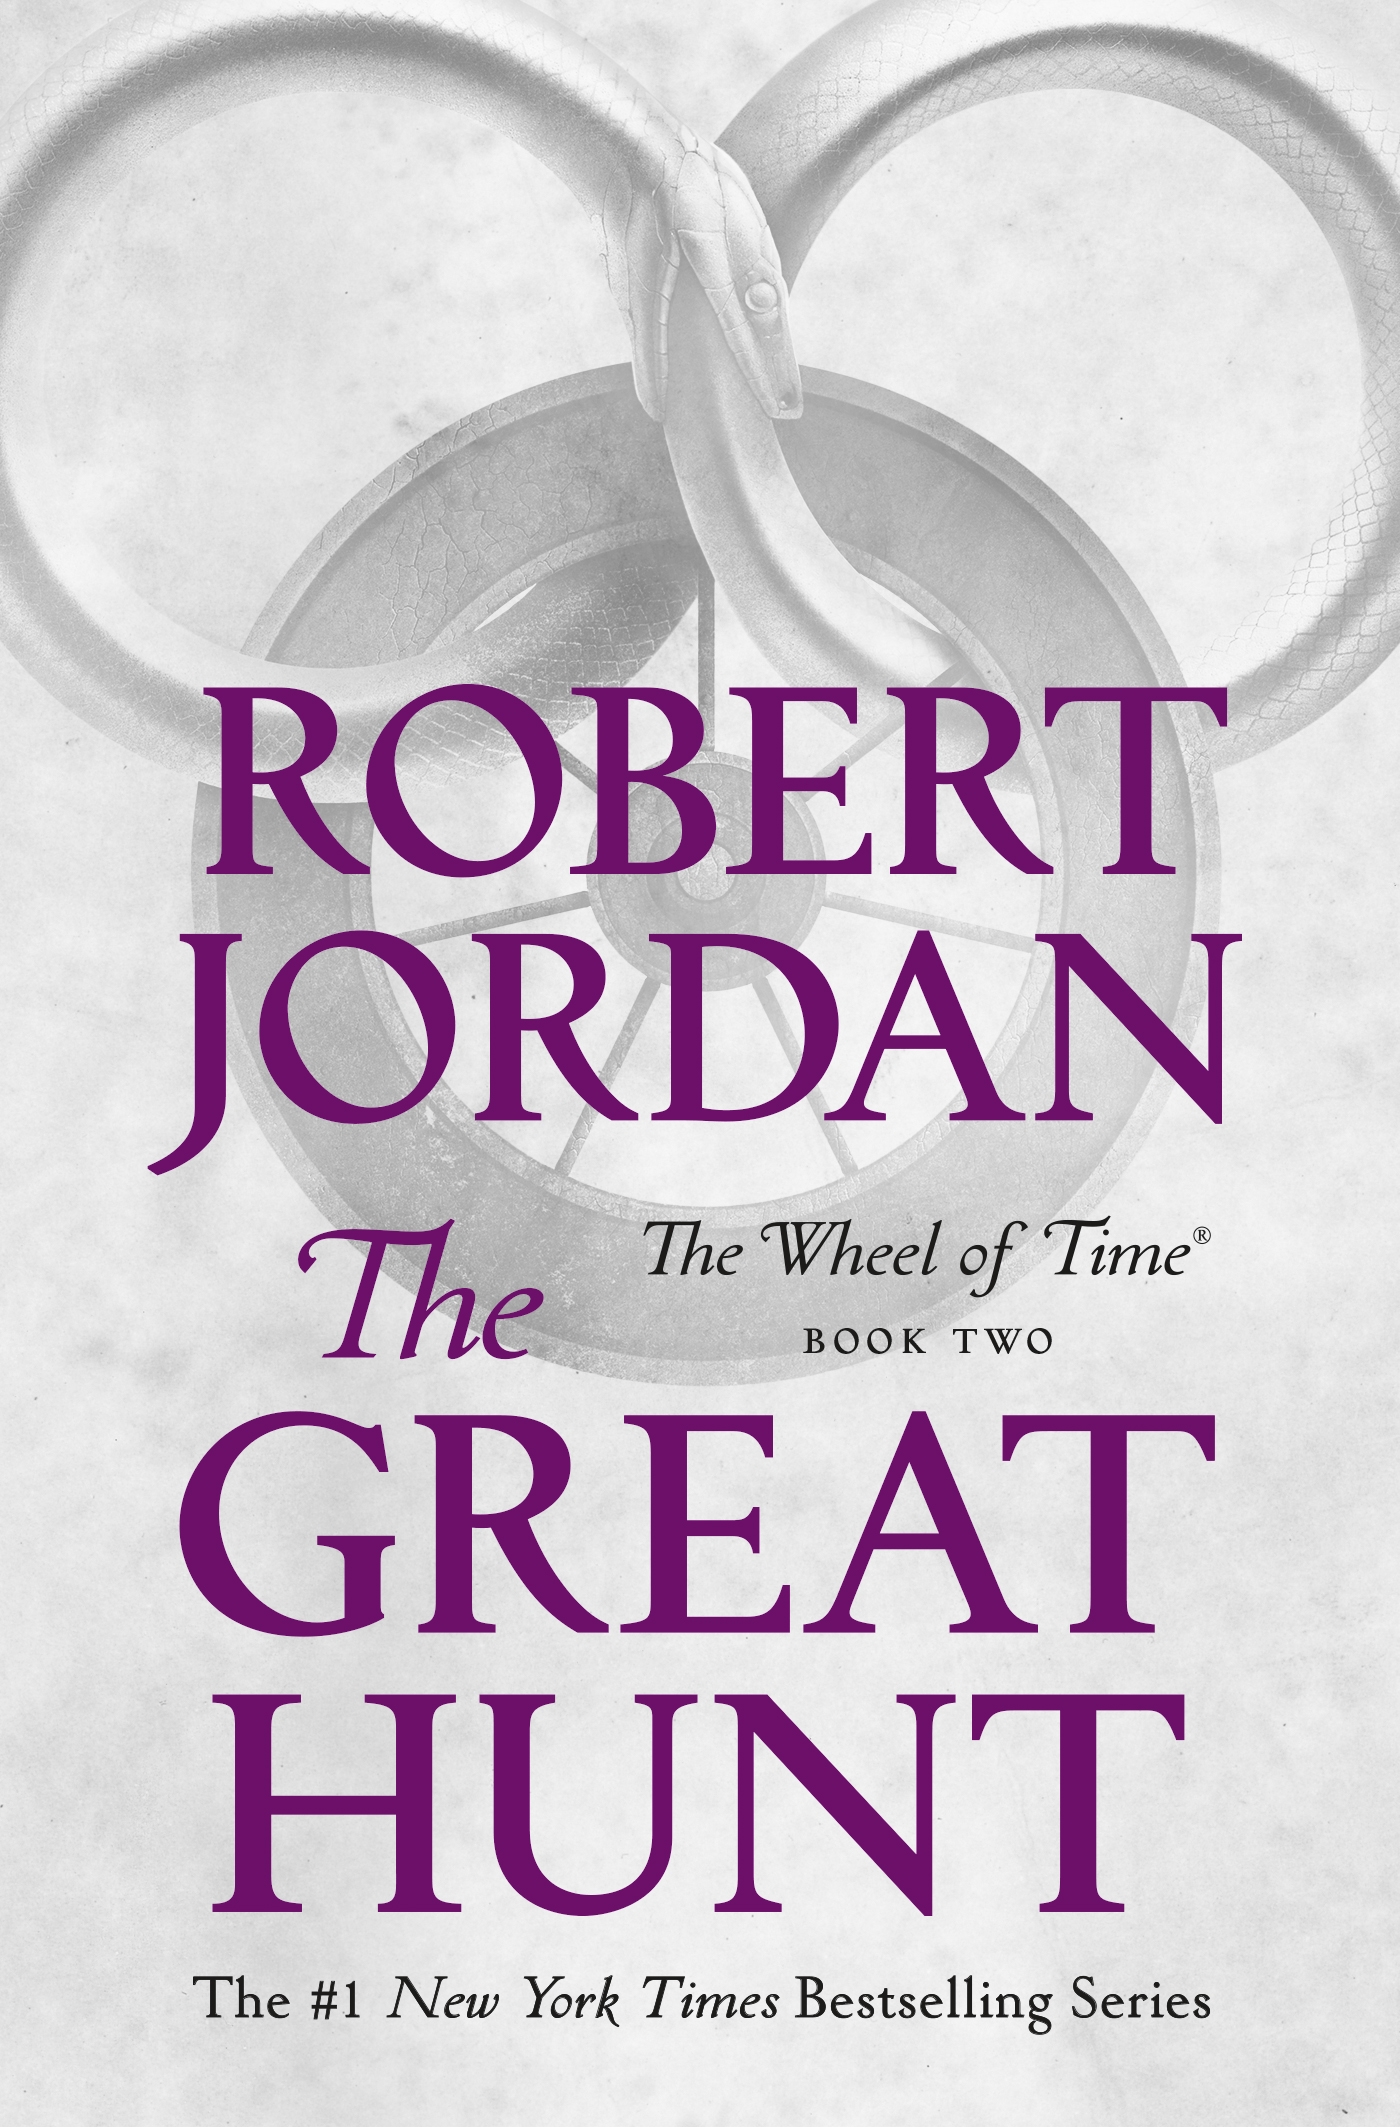 Book “The Great Hunt” by Robert Jordan — October 29, 2019